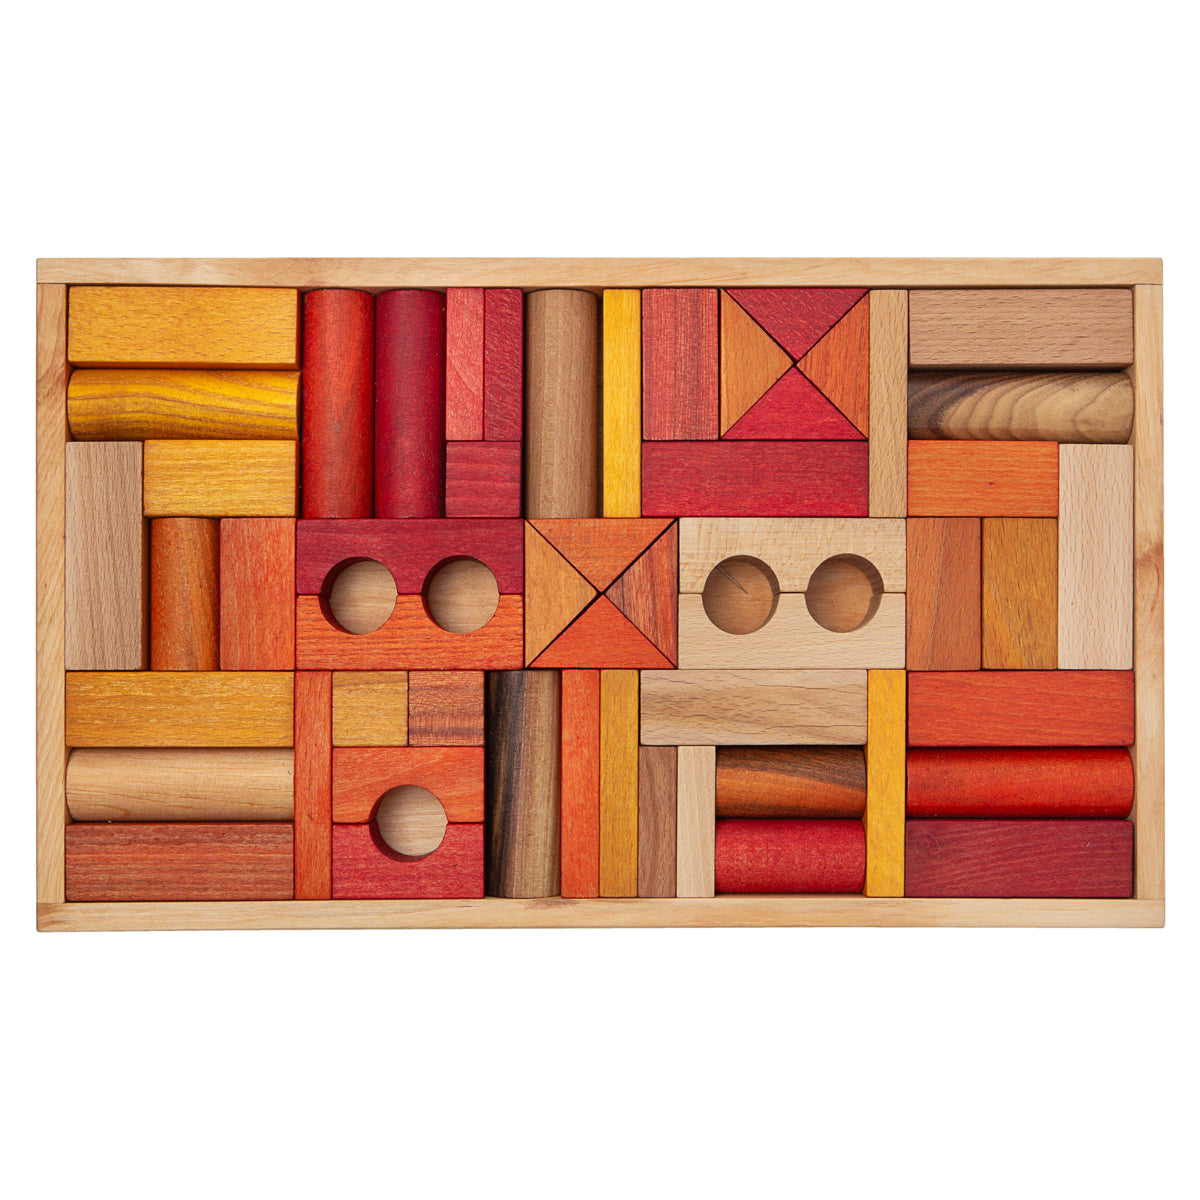 Wooden Montessori Blocks In Tray 54 Pcs, Warm